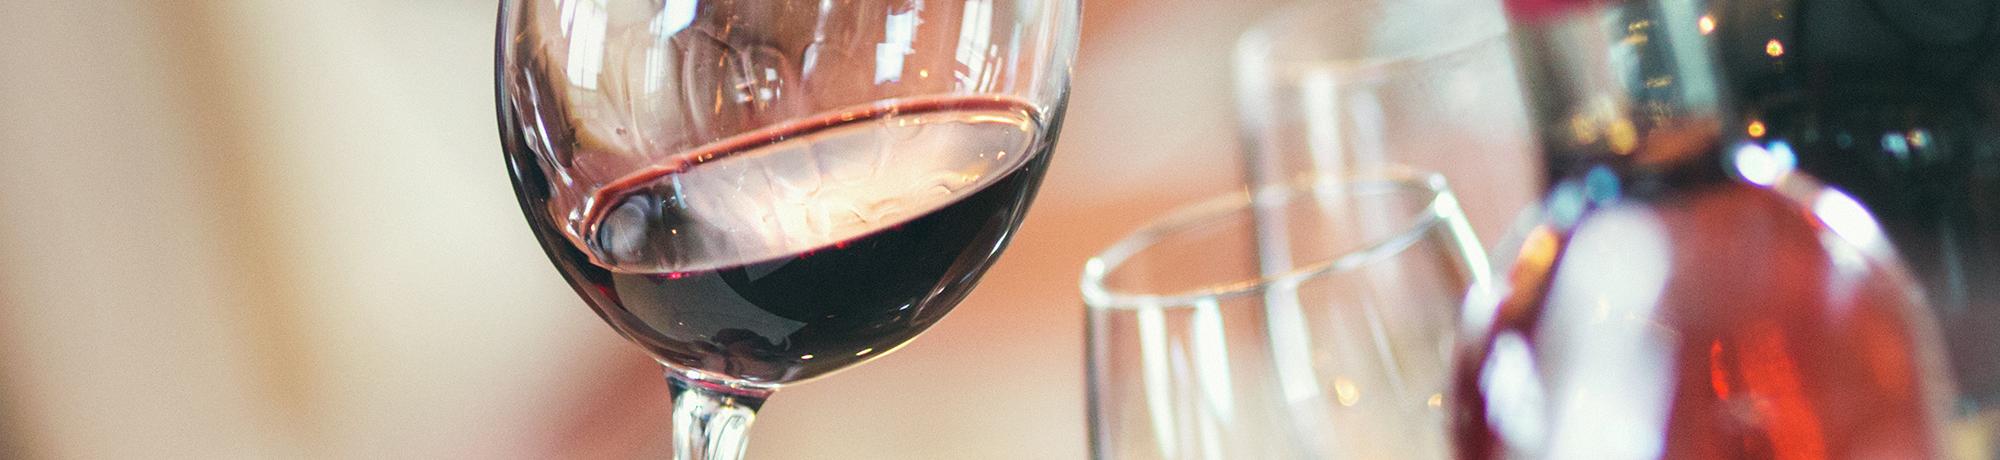 closeup of wine glass